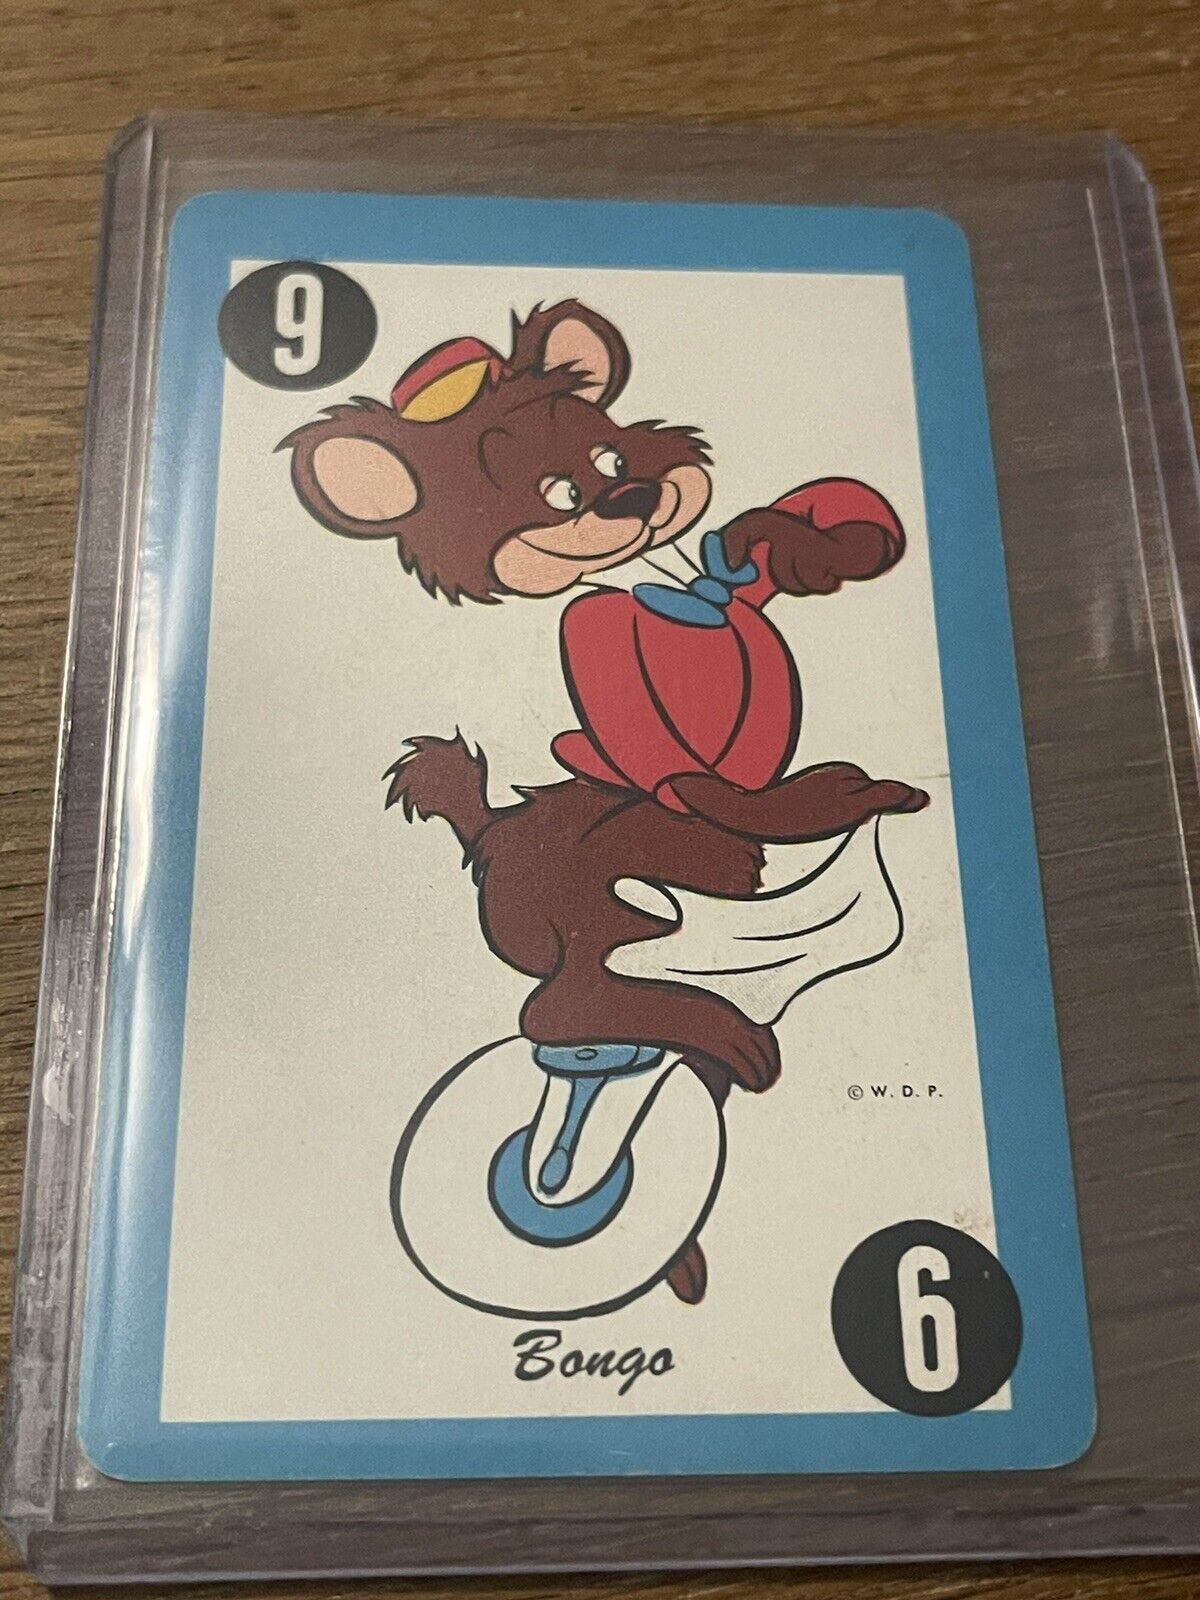 1949 WALT DISNEY PRODUCTIONS 🎥 WHITMAN CARD GAME BONGO THE BEAR PLAYING CARD